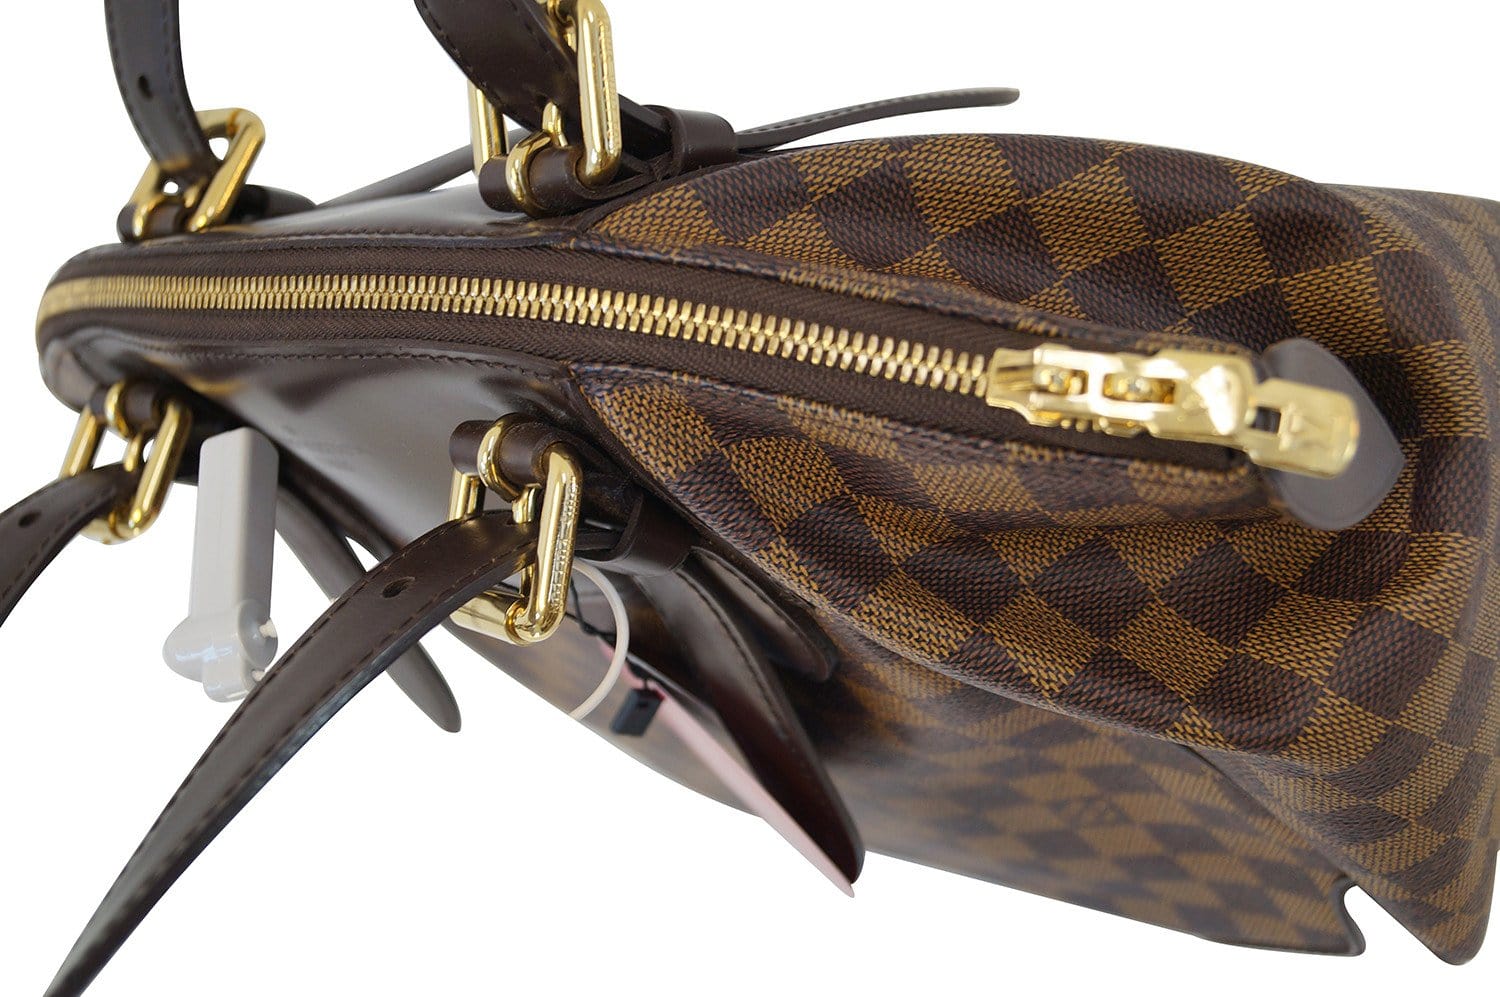 Verona MM Damier Ebene – Keeks Designer Handbags